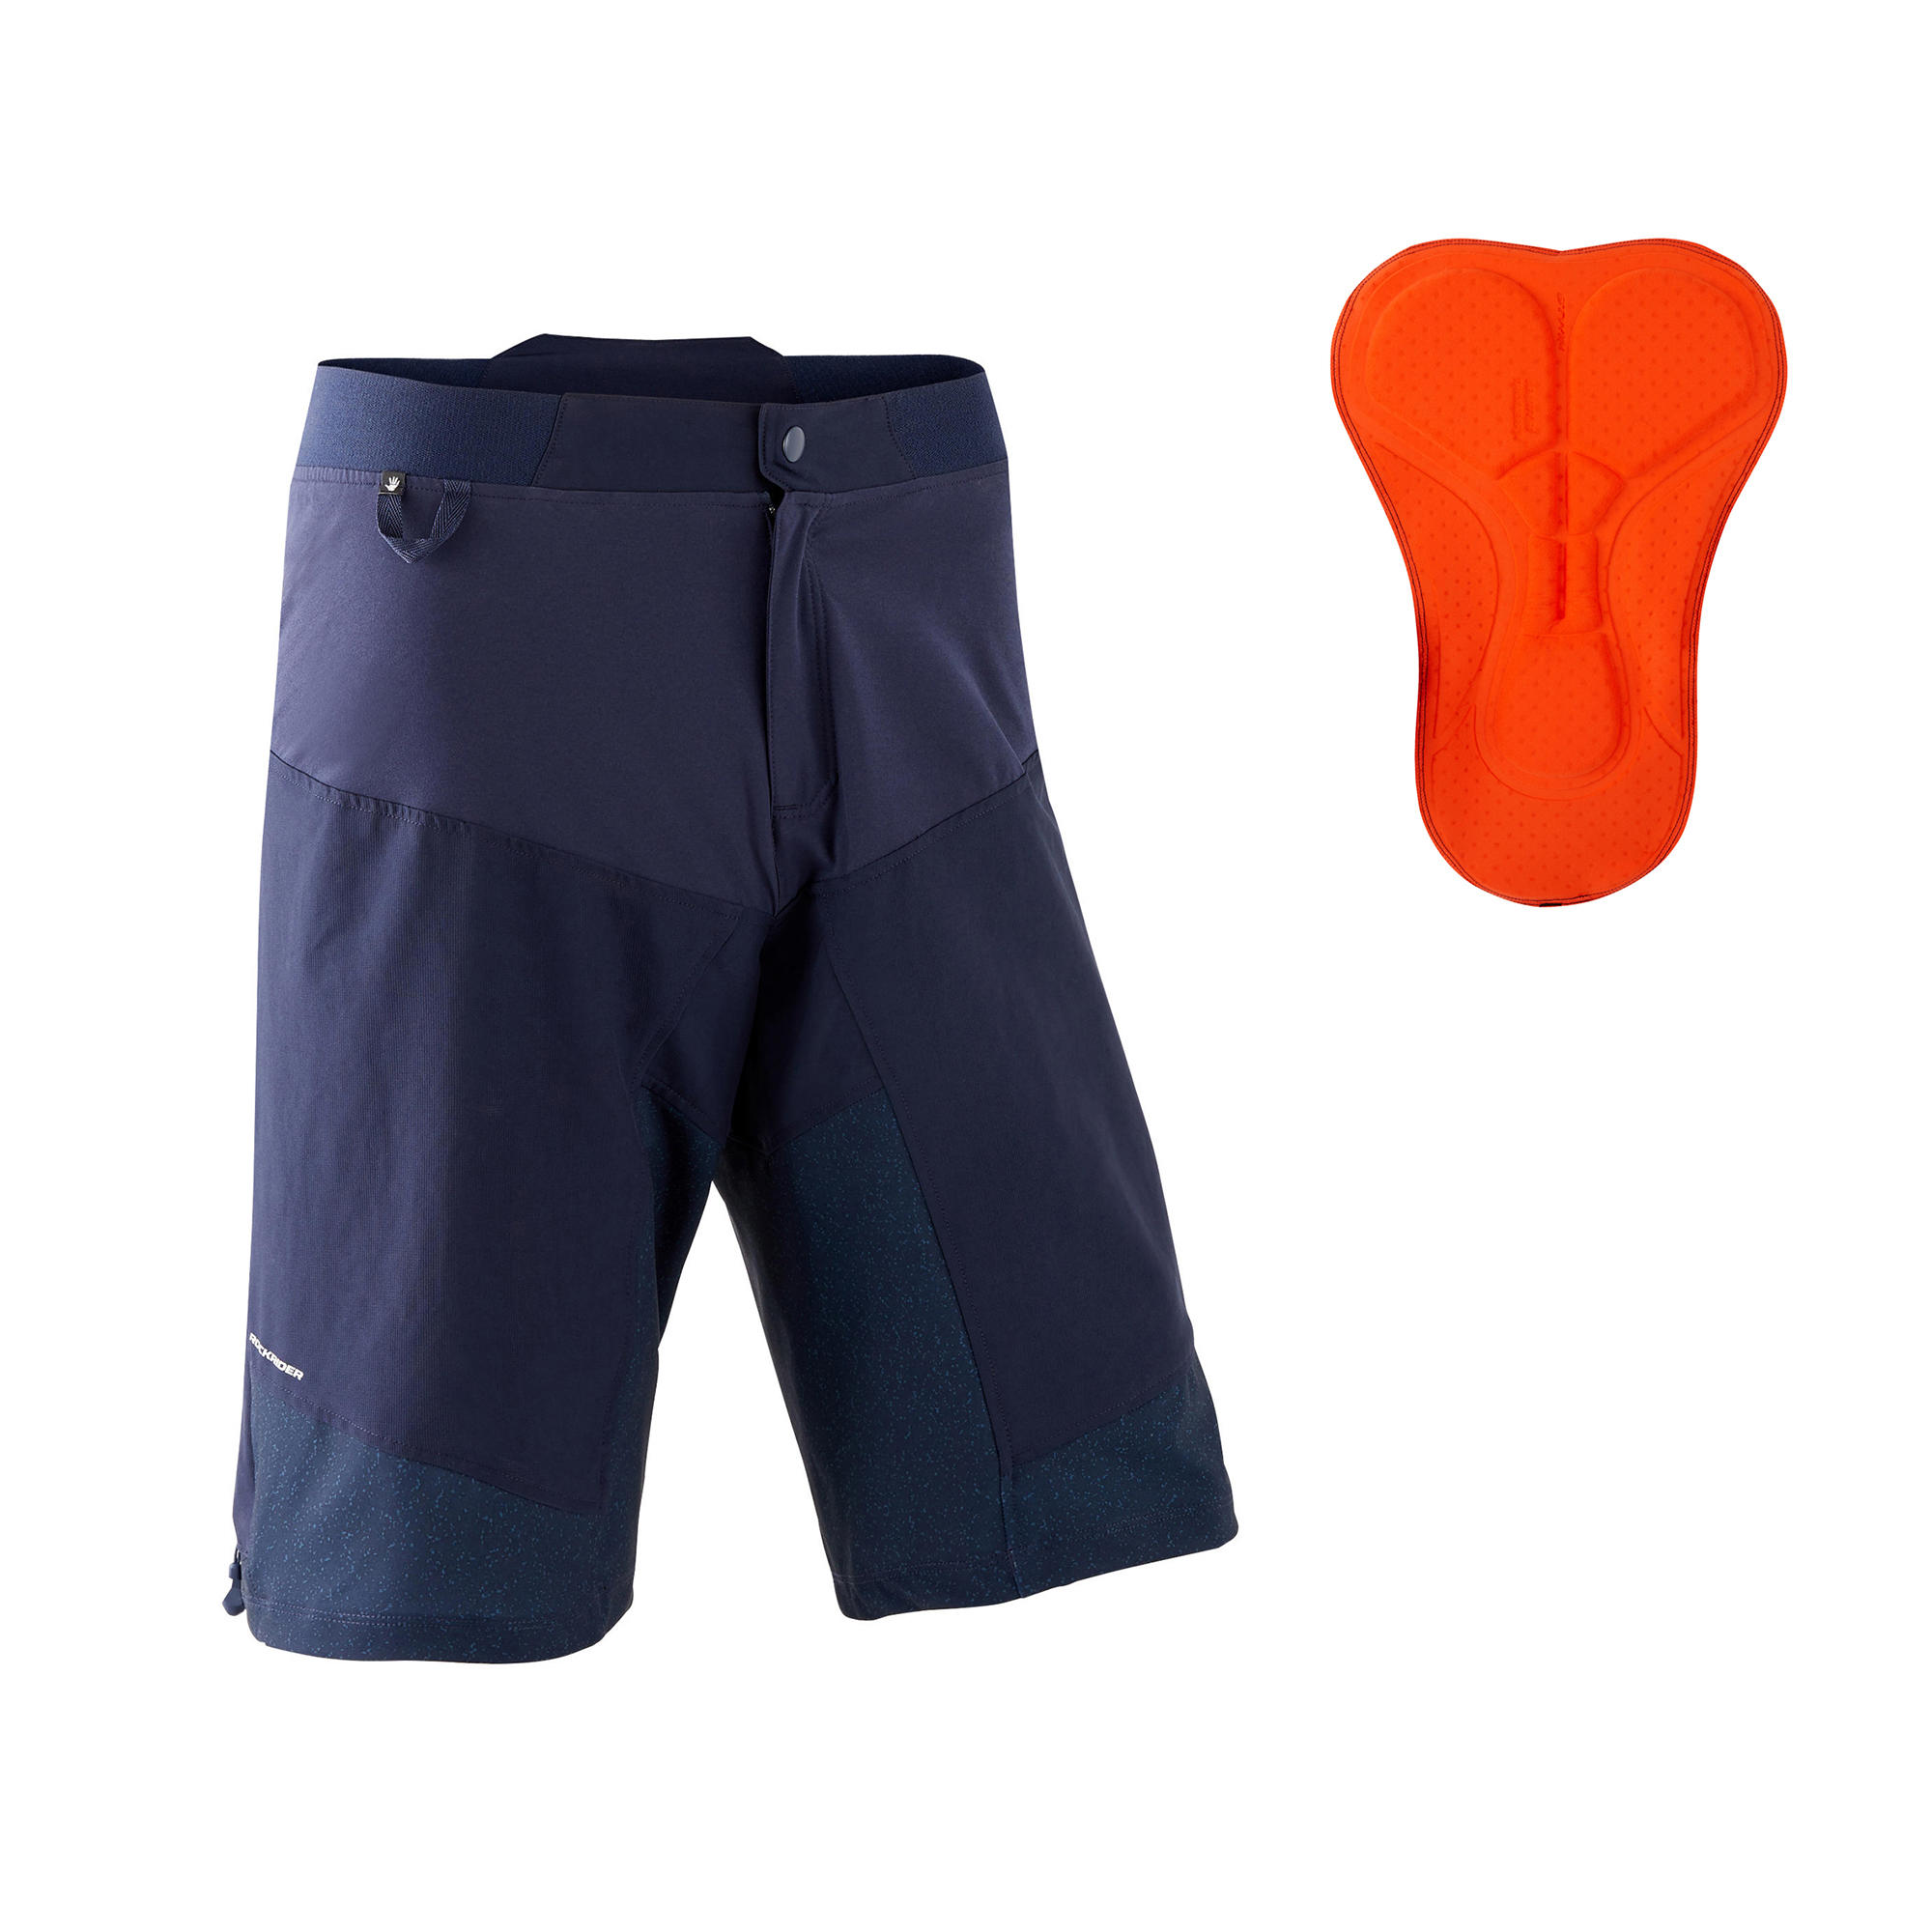 mens bike shorts with pockets